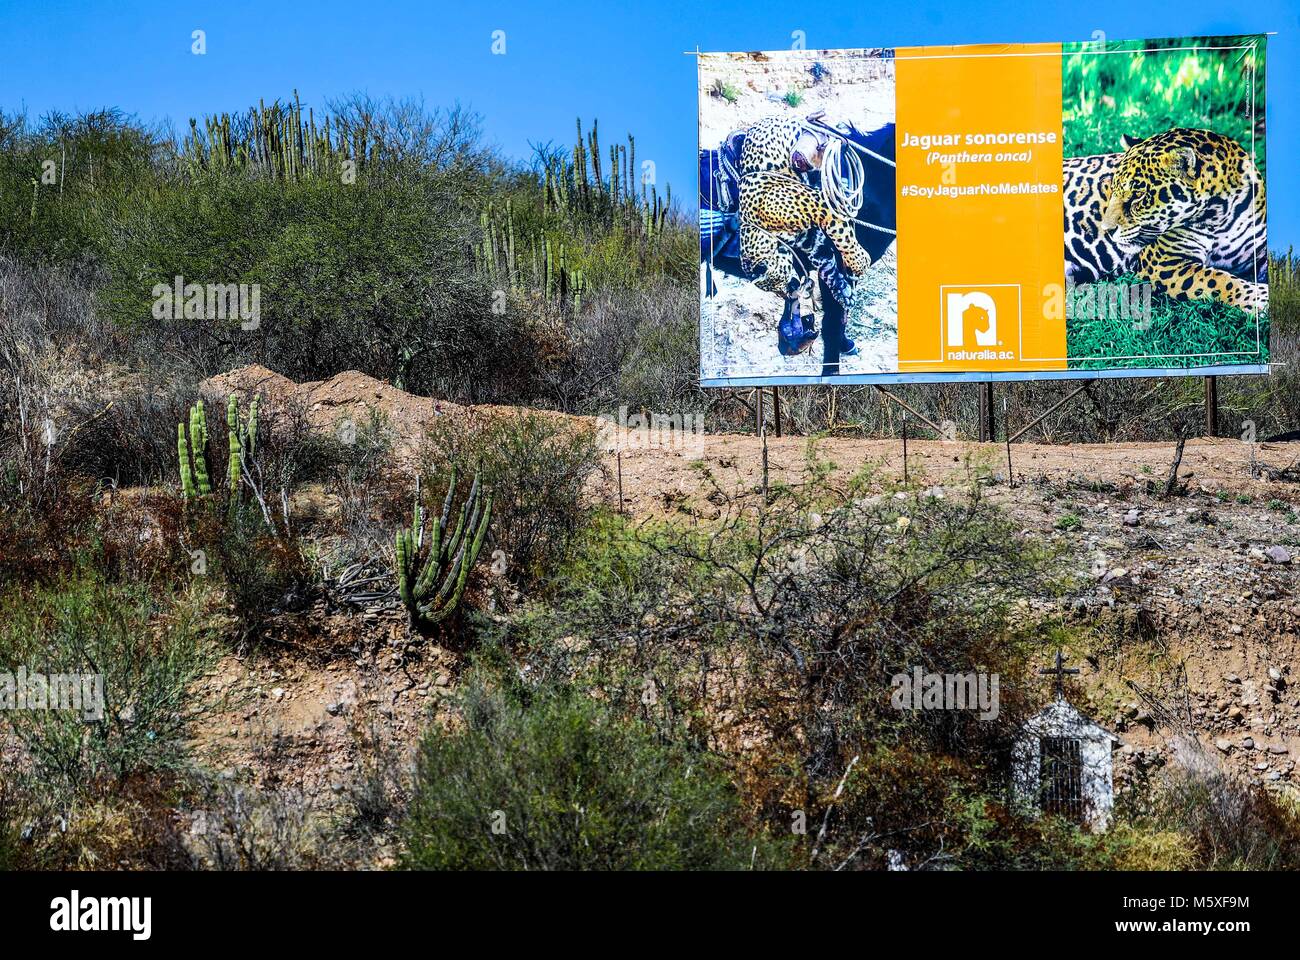 Espectacular de la AC print que Naturalia el mensaje acerca del postín al Jaguar sonorense en la entrada al pueblo de Moctezuma en la ruta de la sier Banque D'Images